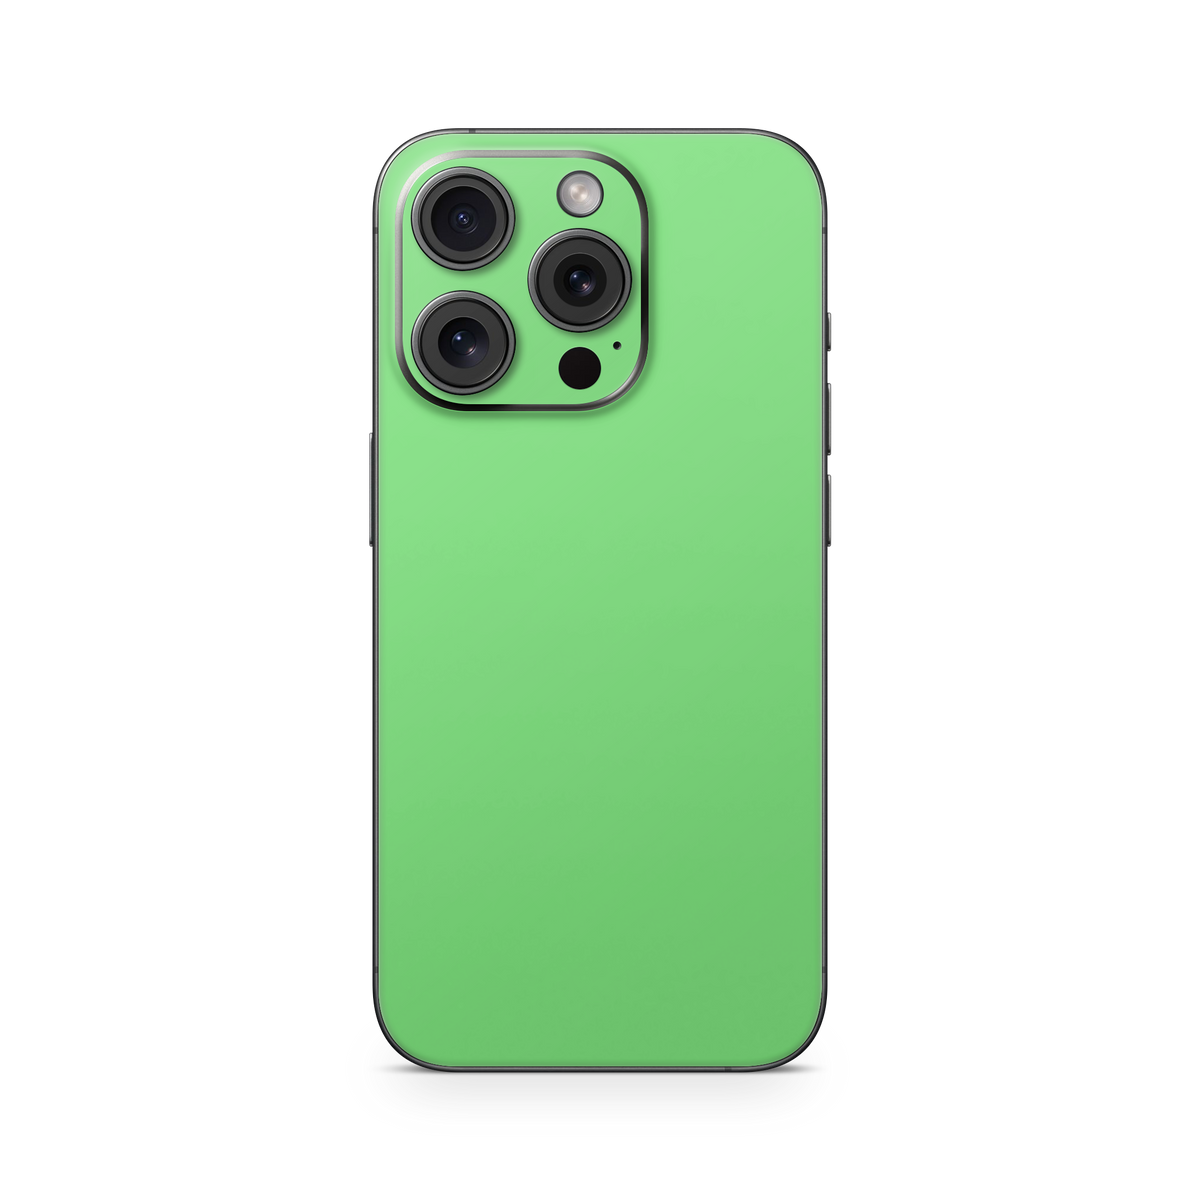 Apple iPhone Pastel Green Skin